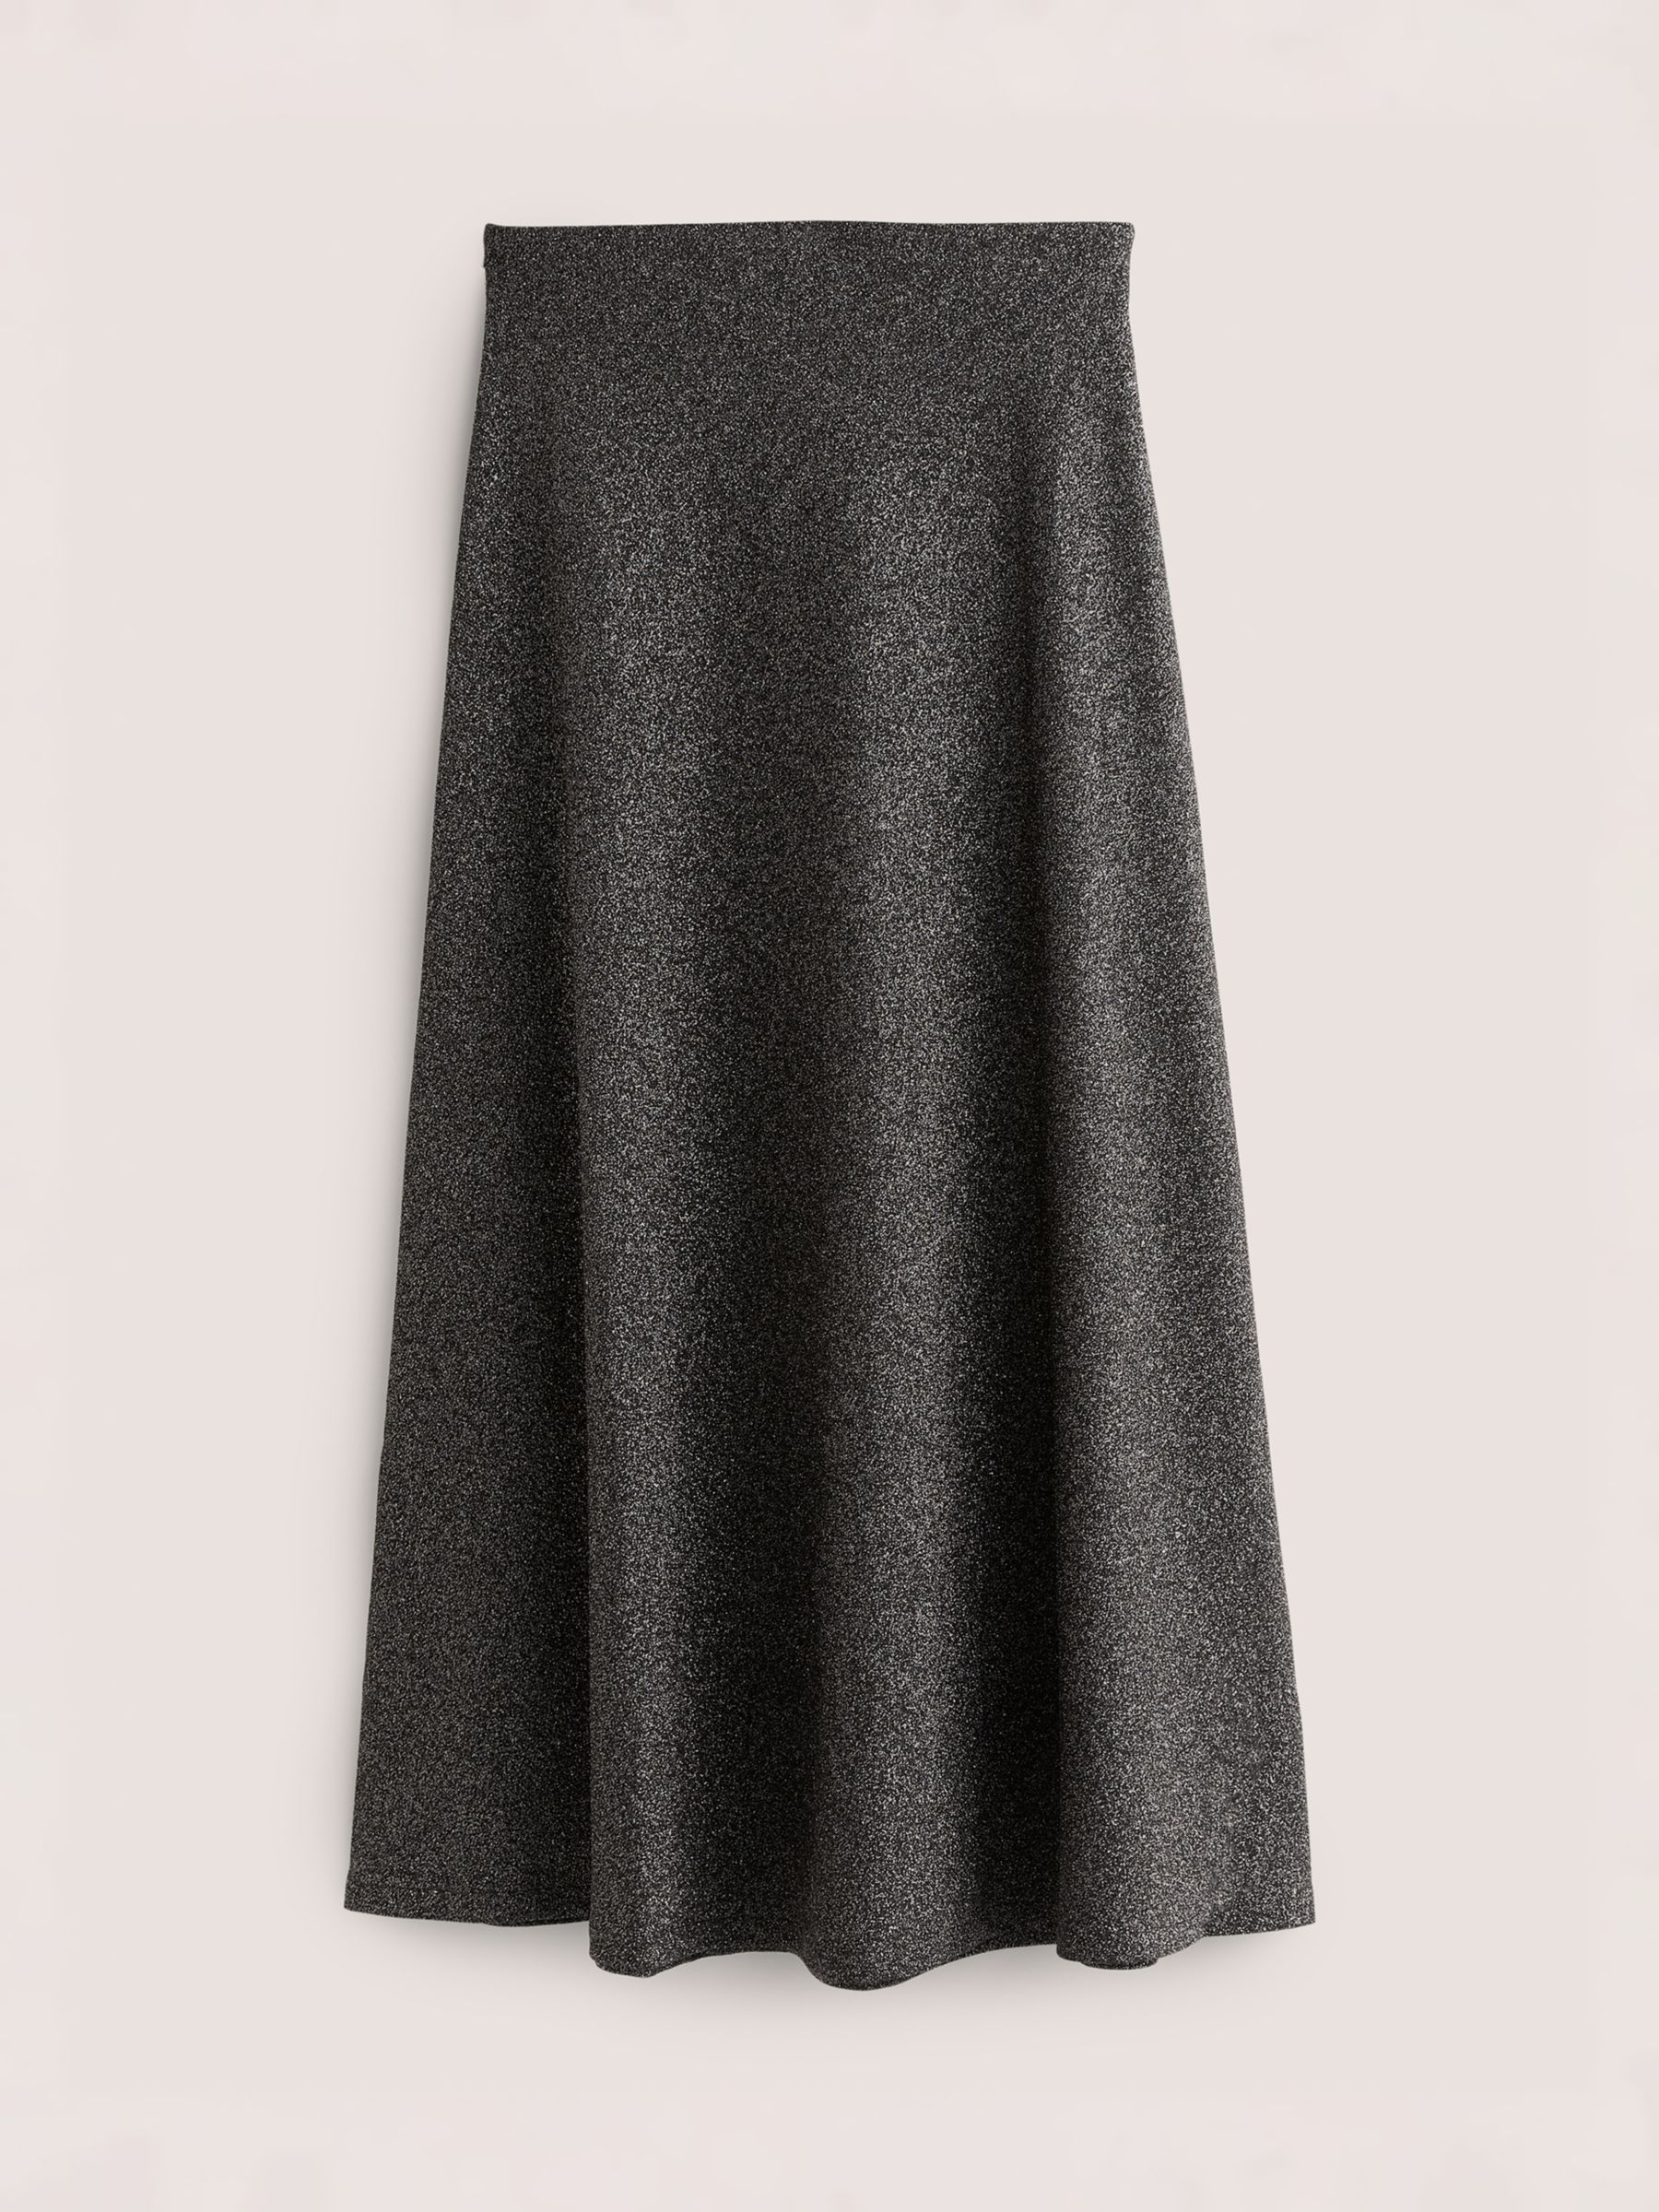 Buy Boden Metallic Jersey Skirt, Black/Silver Online at johnlewis.com